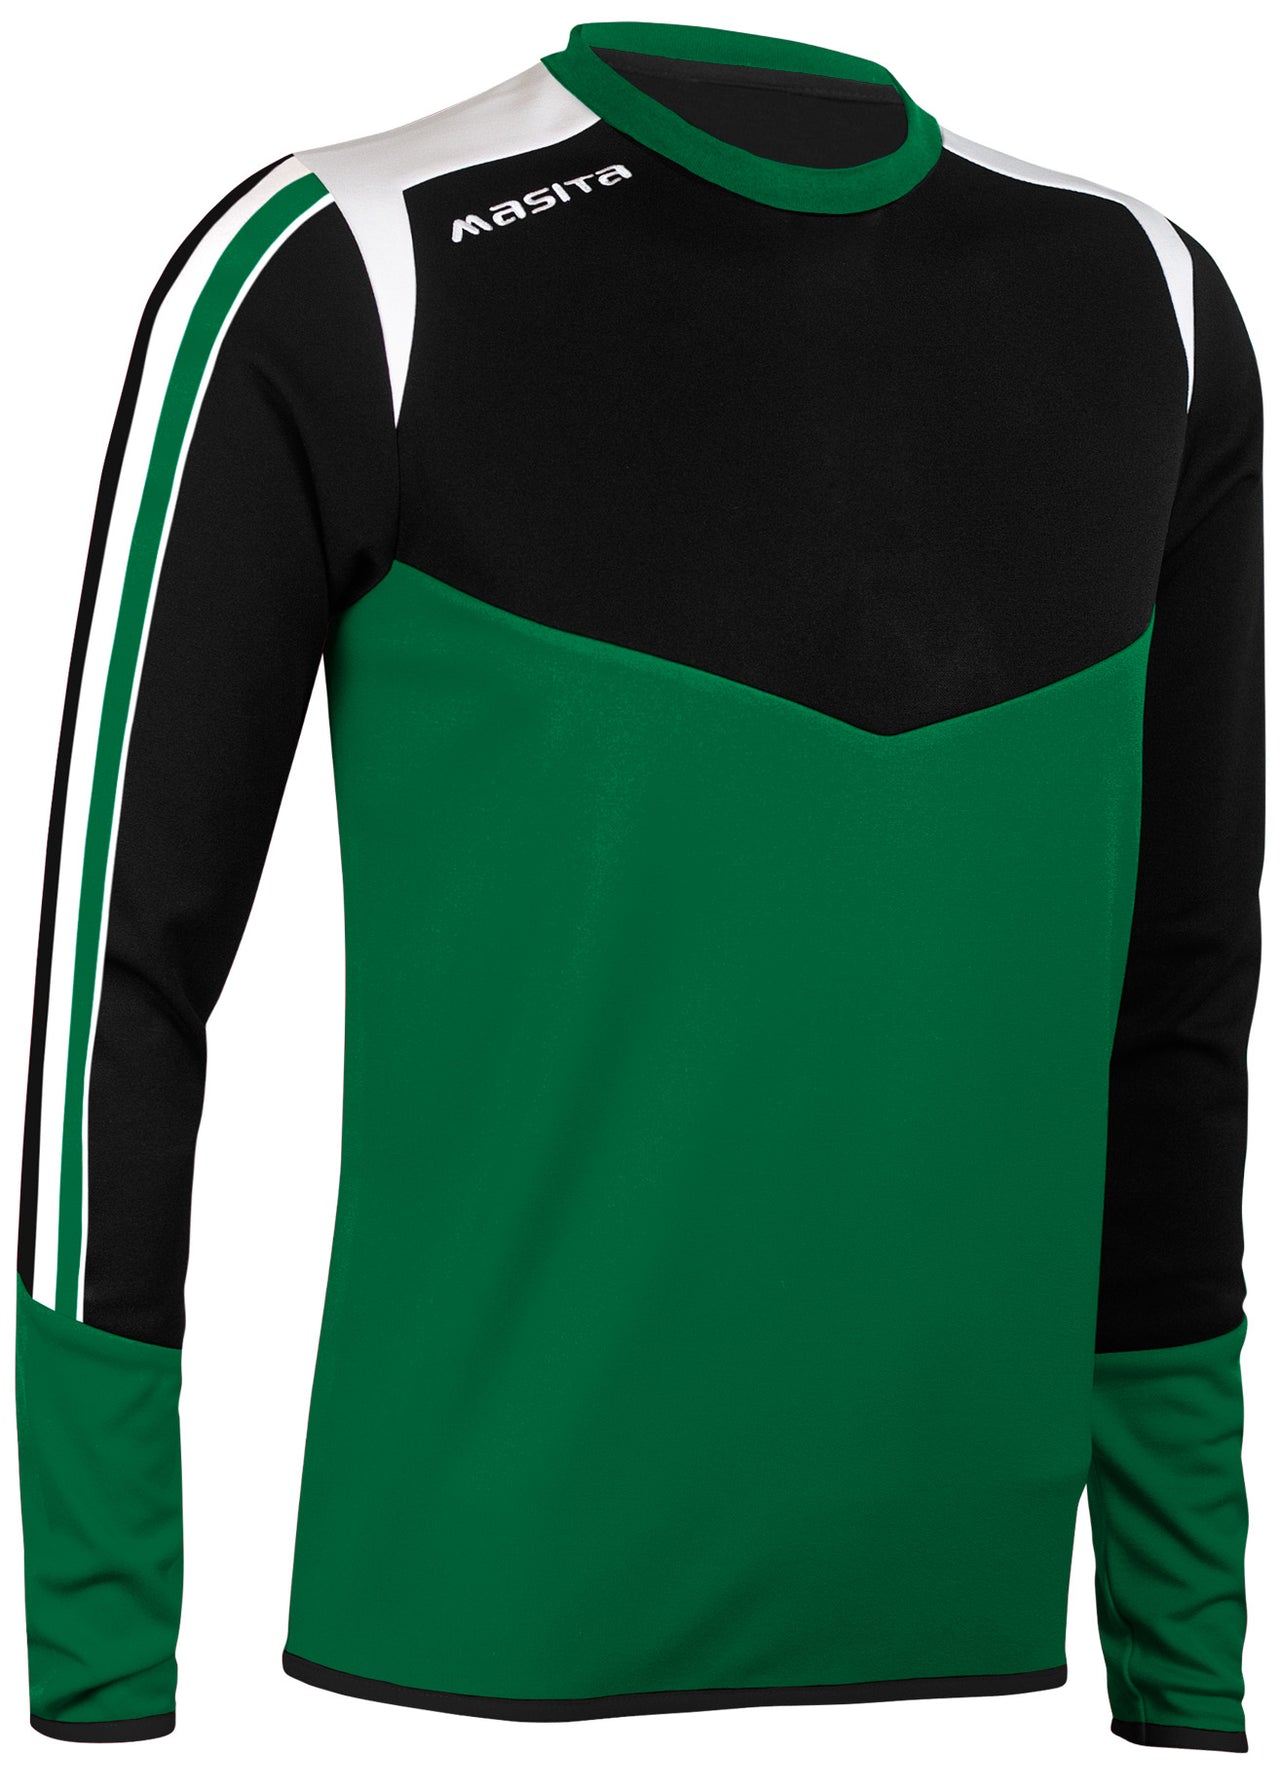 Montana Sweater Green/Black/White Adult